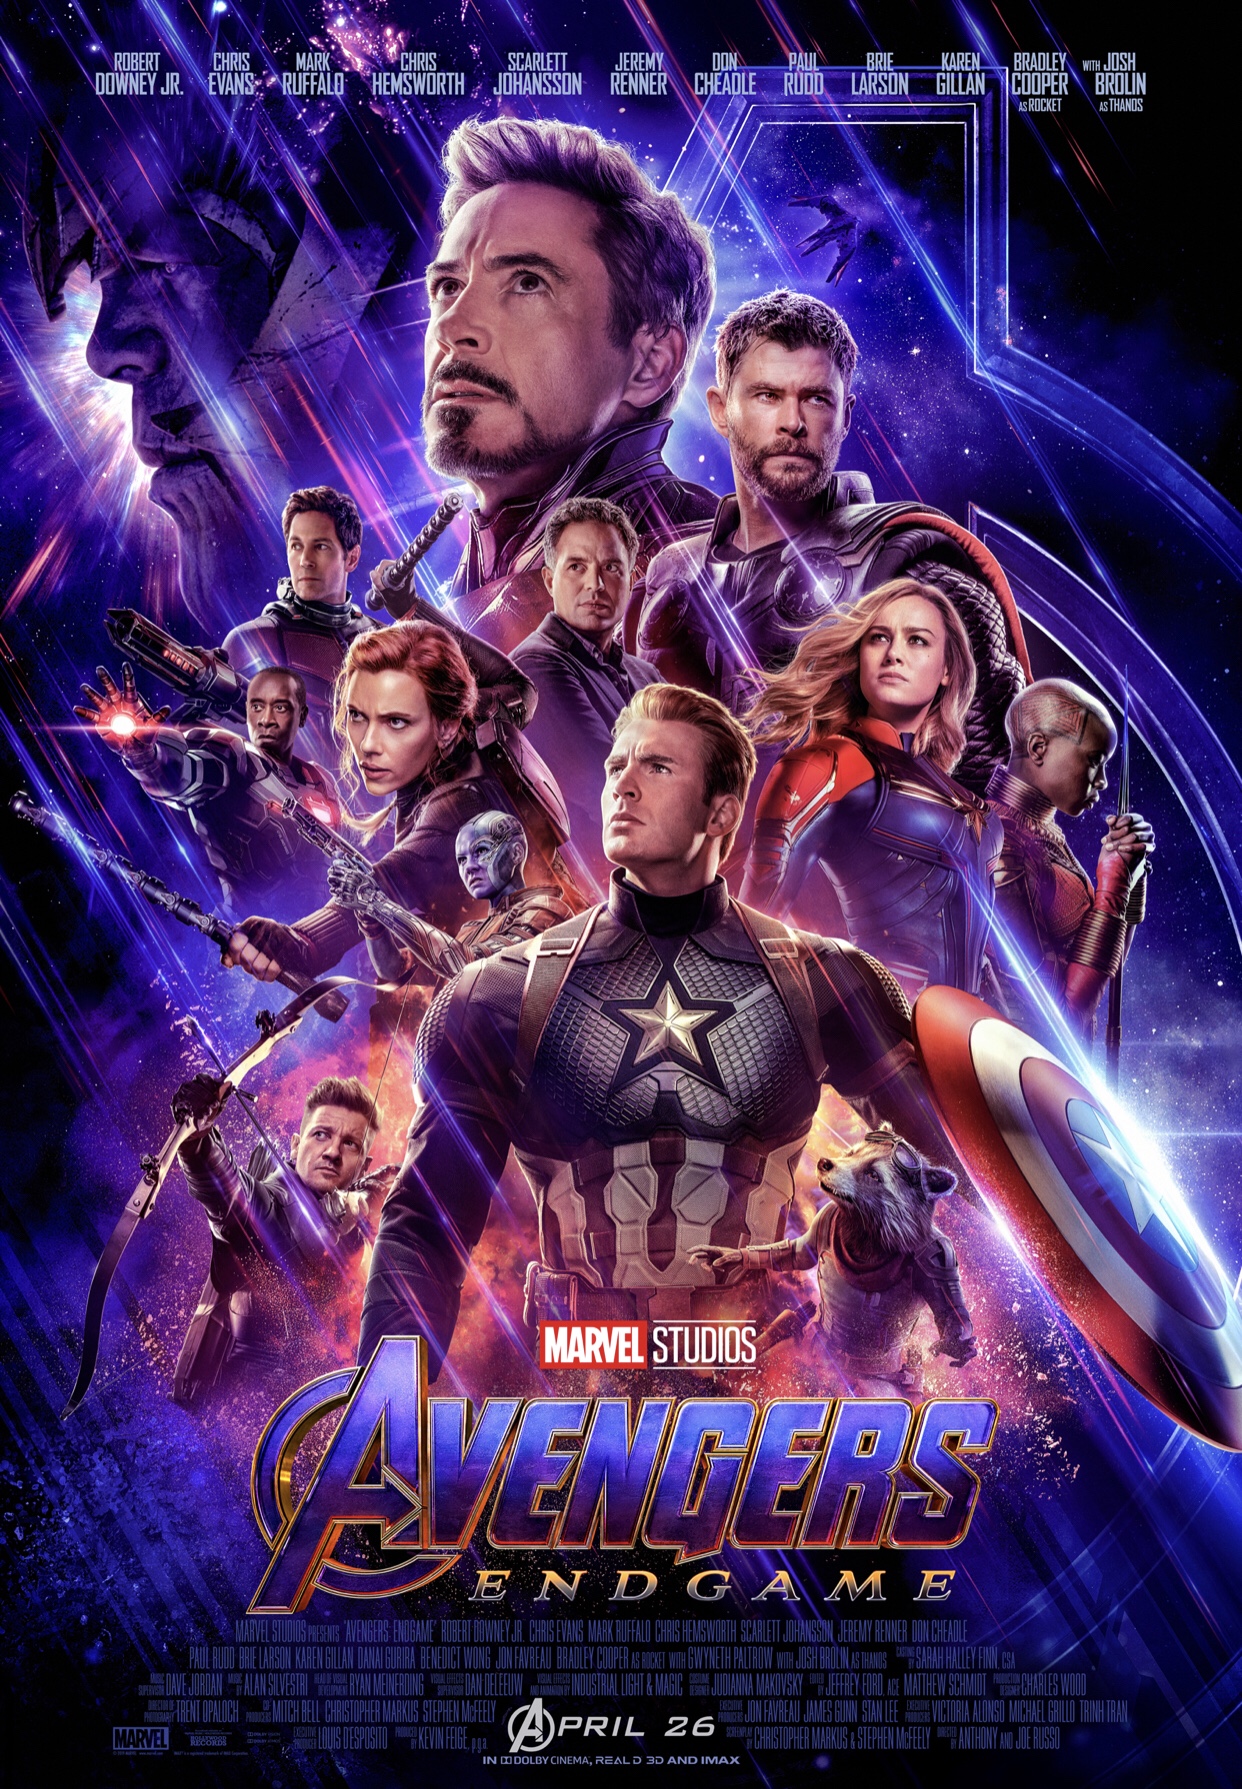 New Avengers Endgame Trailer and Movie Poster